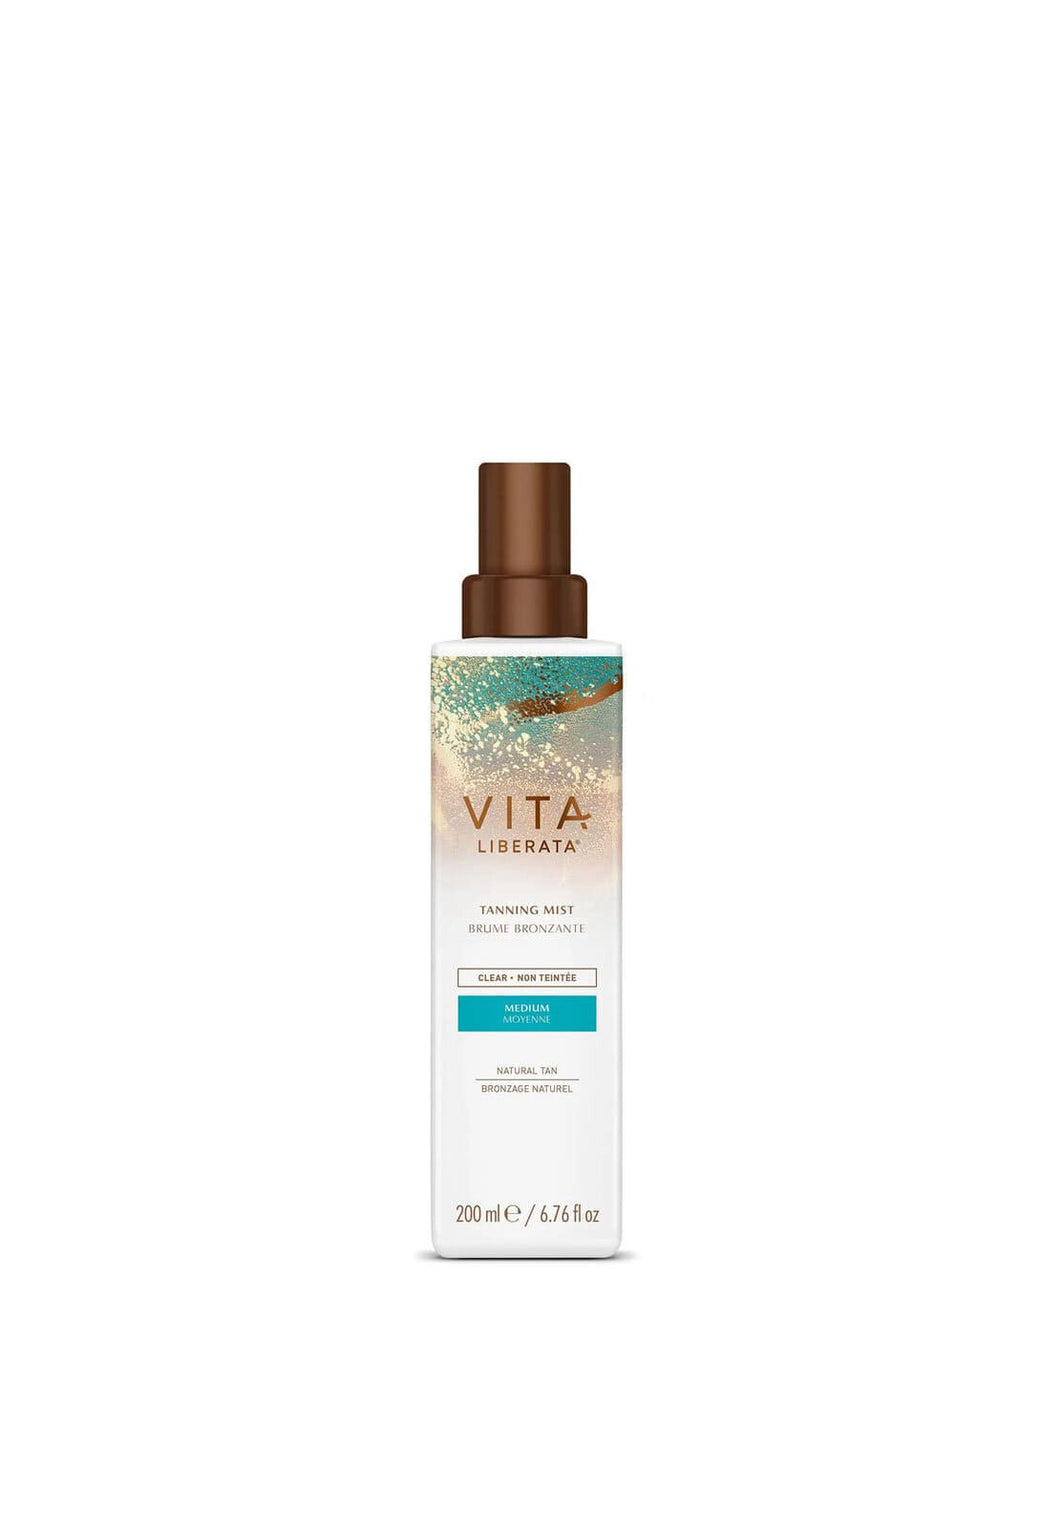 Vita Liberata Tanning Mist Medium -Tinted